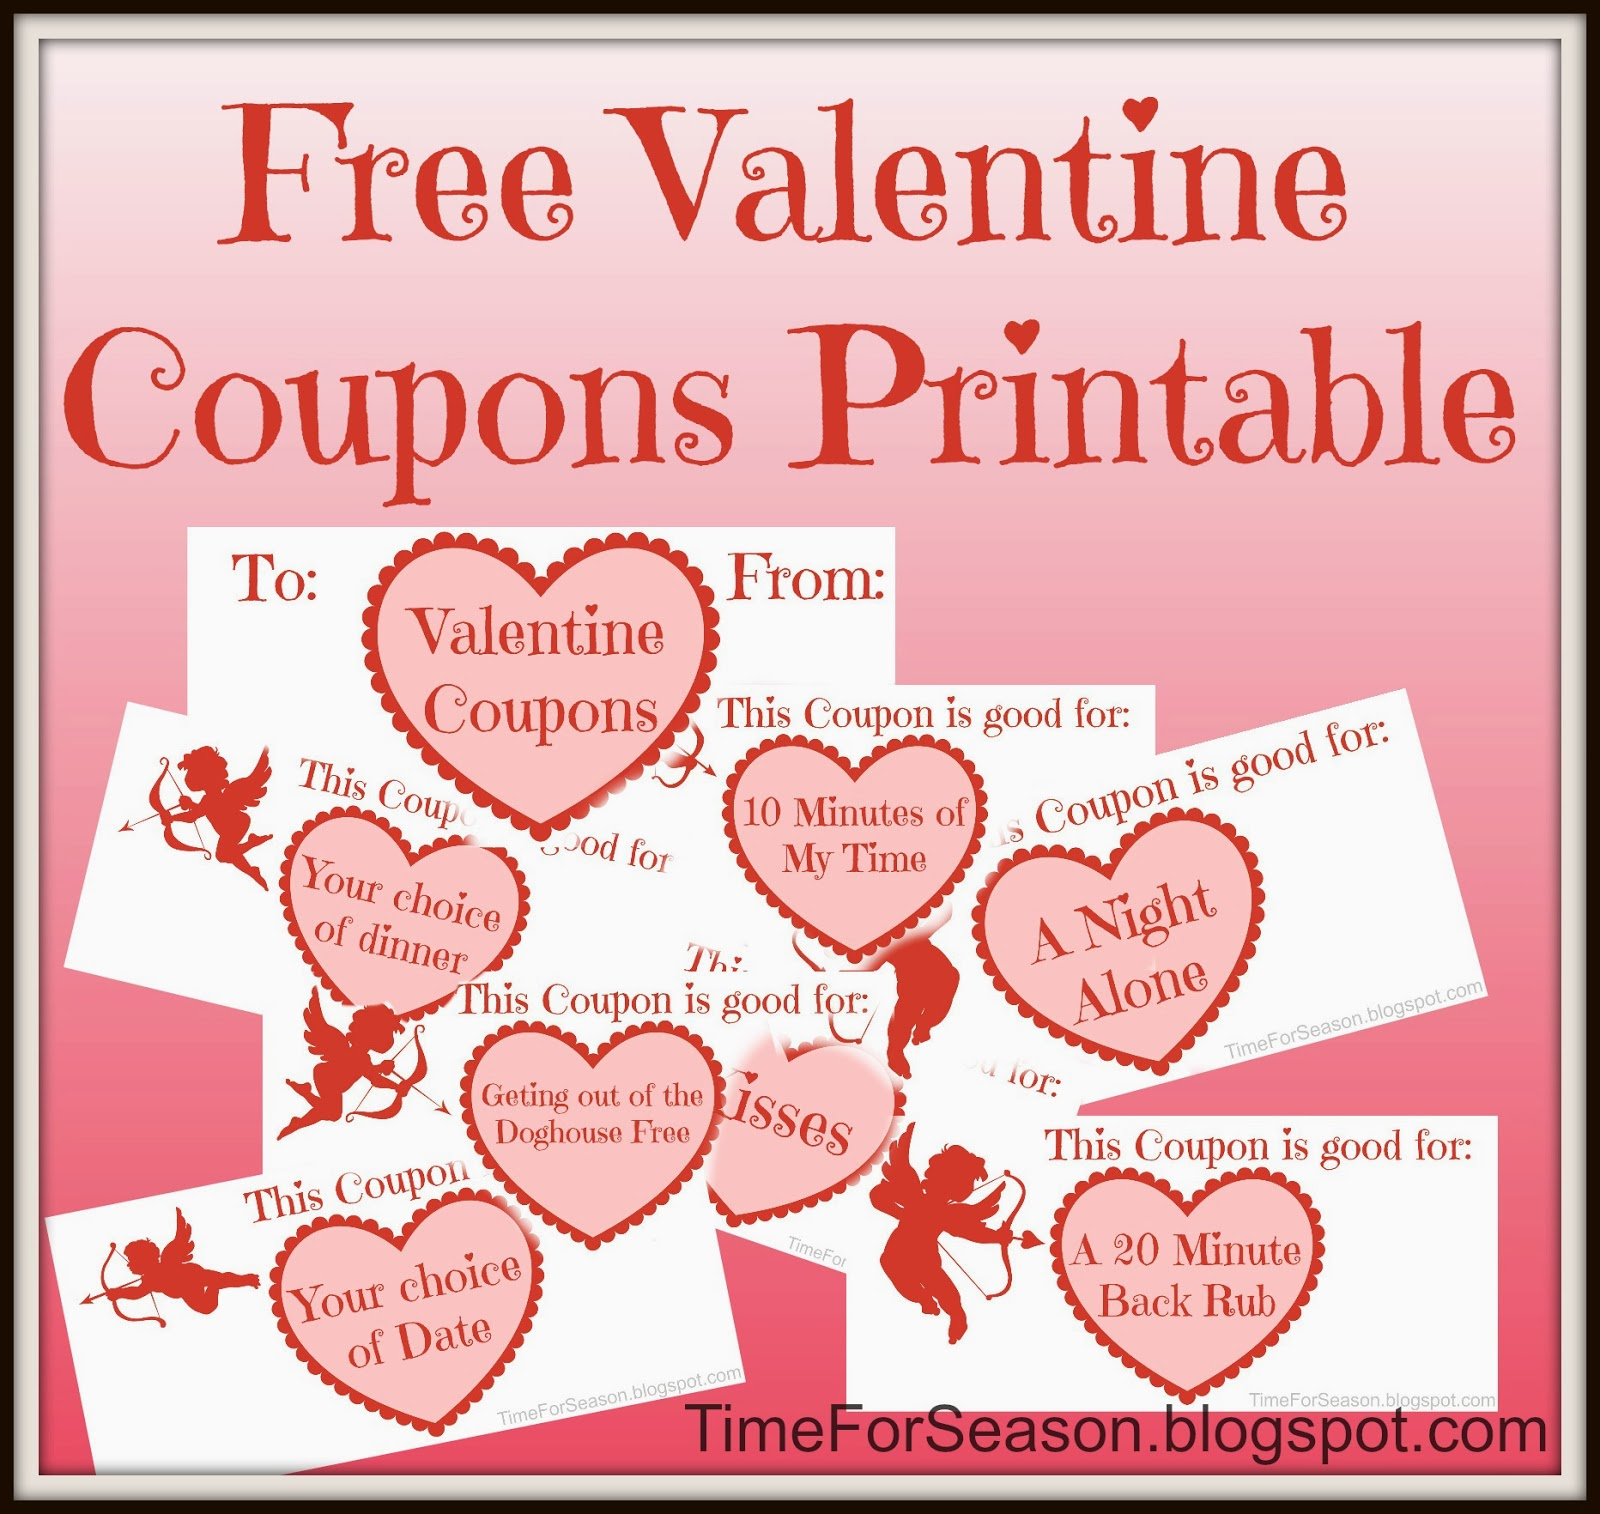 Valentine Coupons - Free Printable - Free Printable Coupons 2014